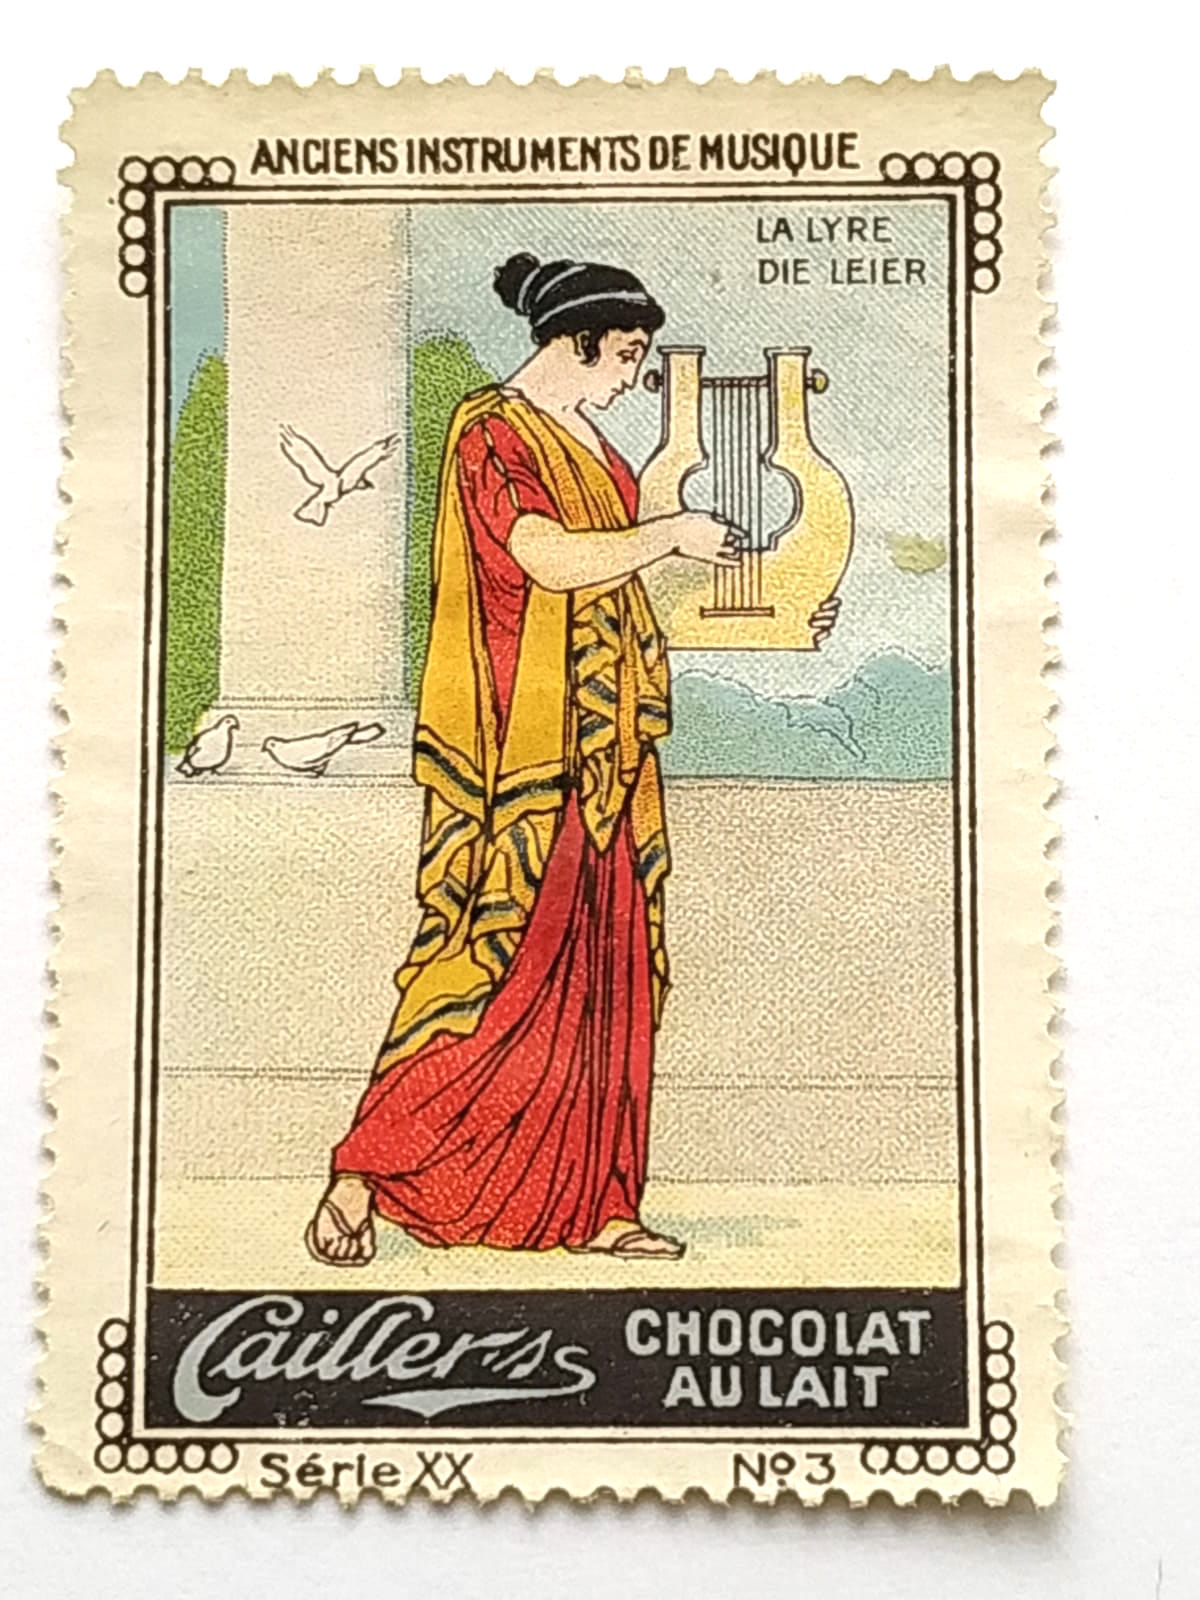 Antik müzik aletleri Lir / Cailler's çikolata reklam pulu 0.00 TL + KDV